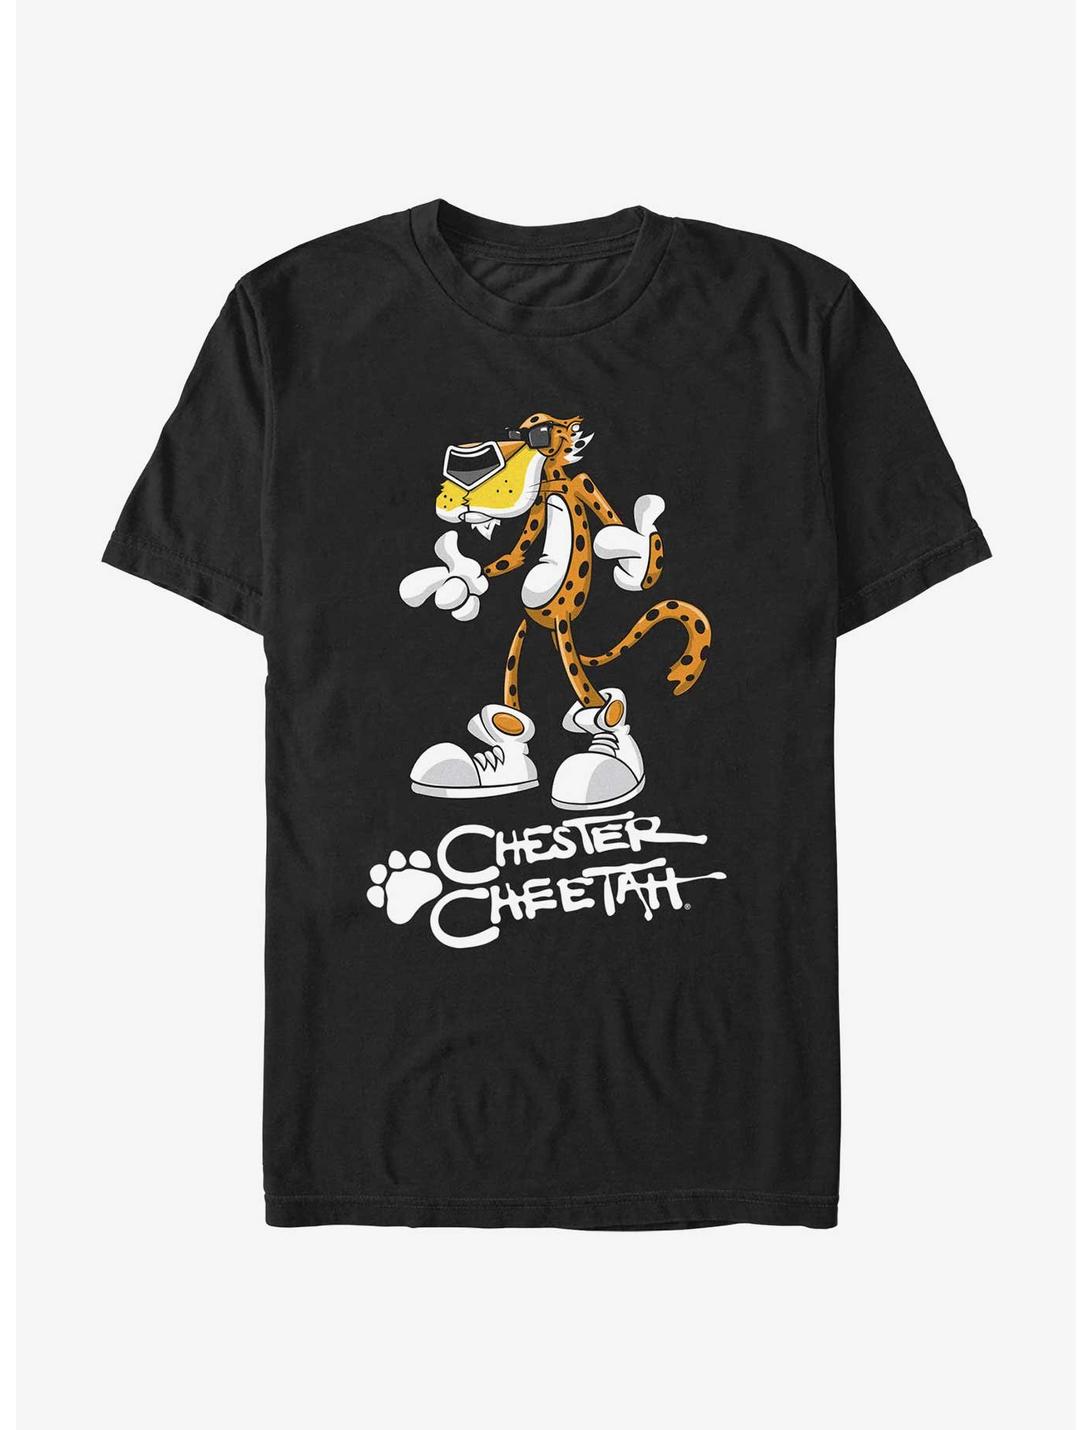 Cheetos Chester Cheetah Cool Stance T-Shirt, BLACK, hi-res